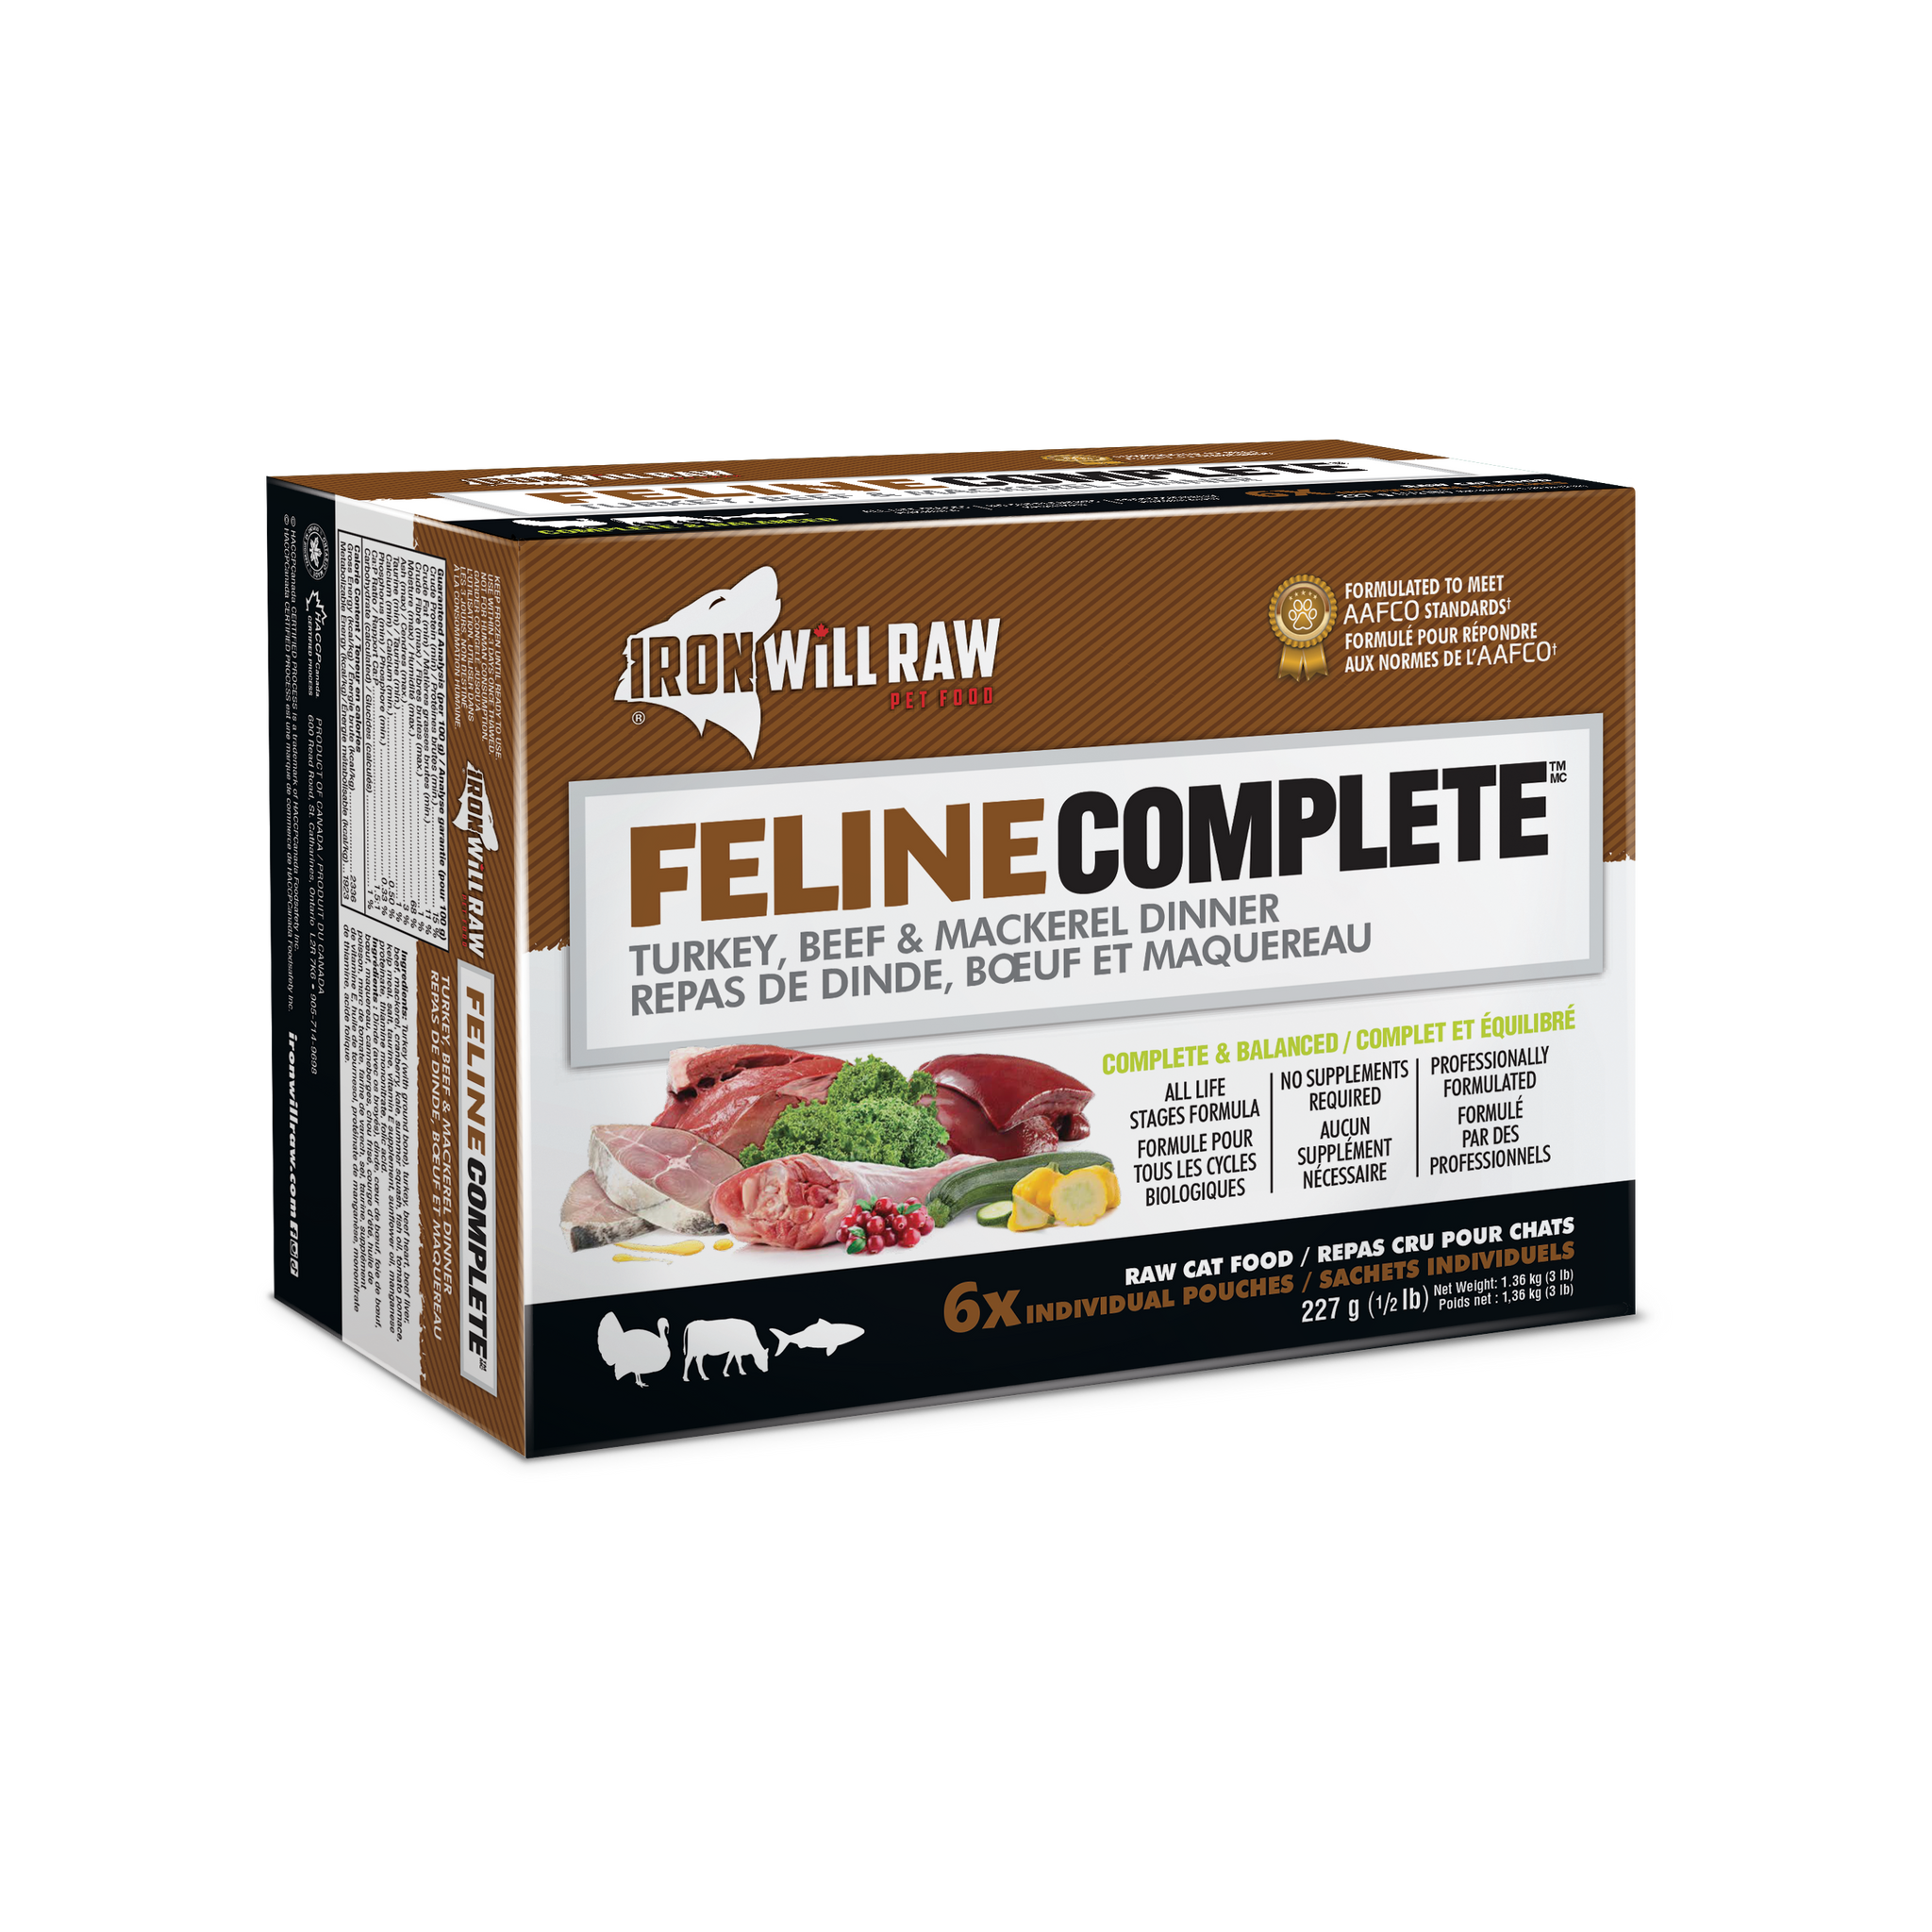 Iron Will Raw Feline Complete Turkey, Beef & Mackerel Dinner